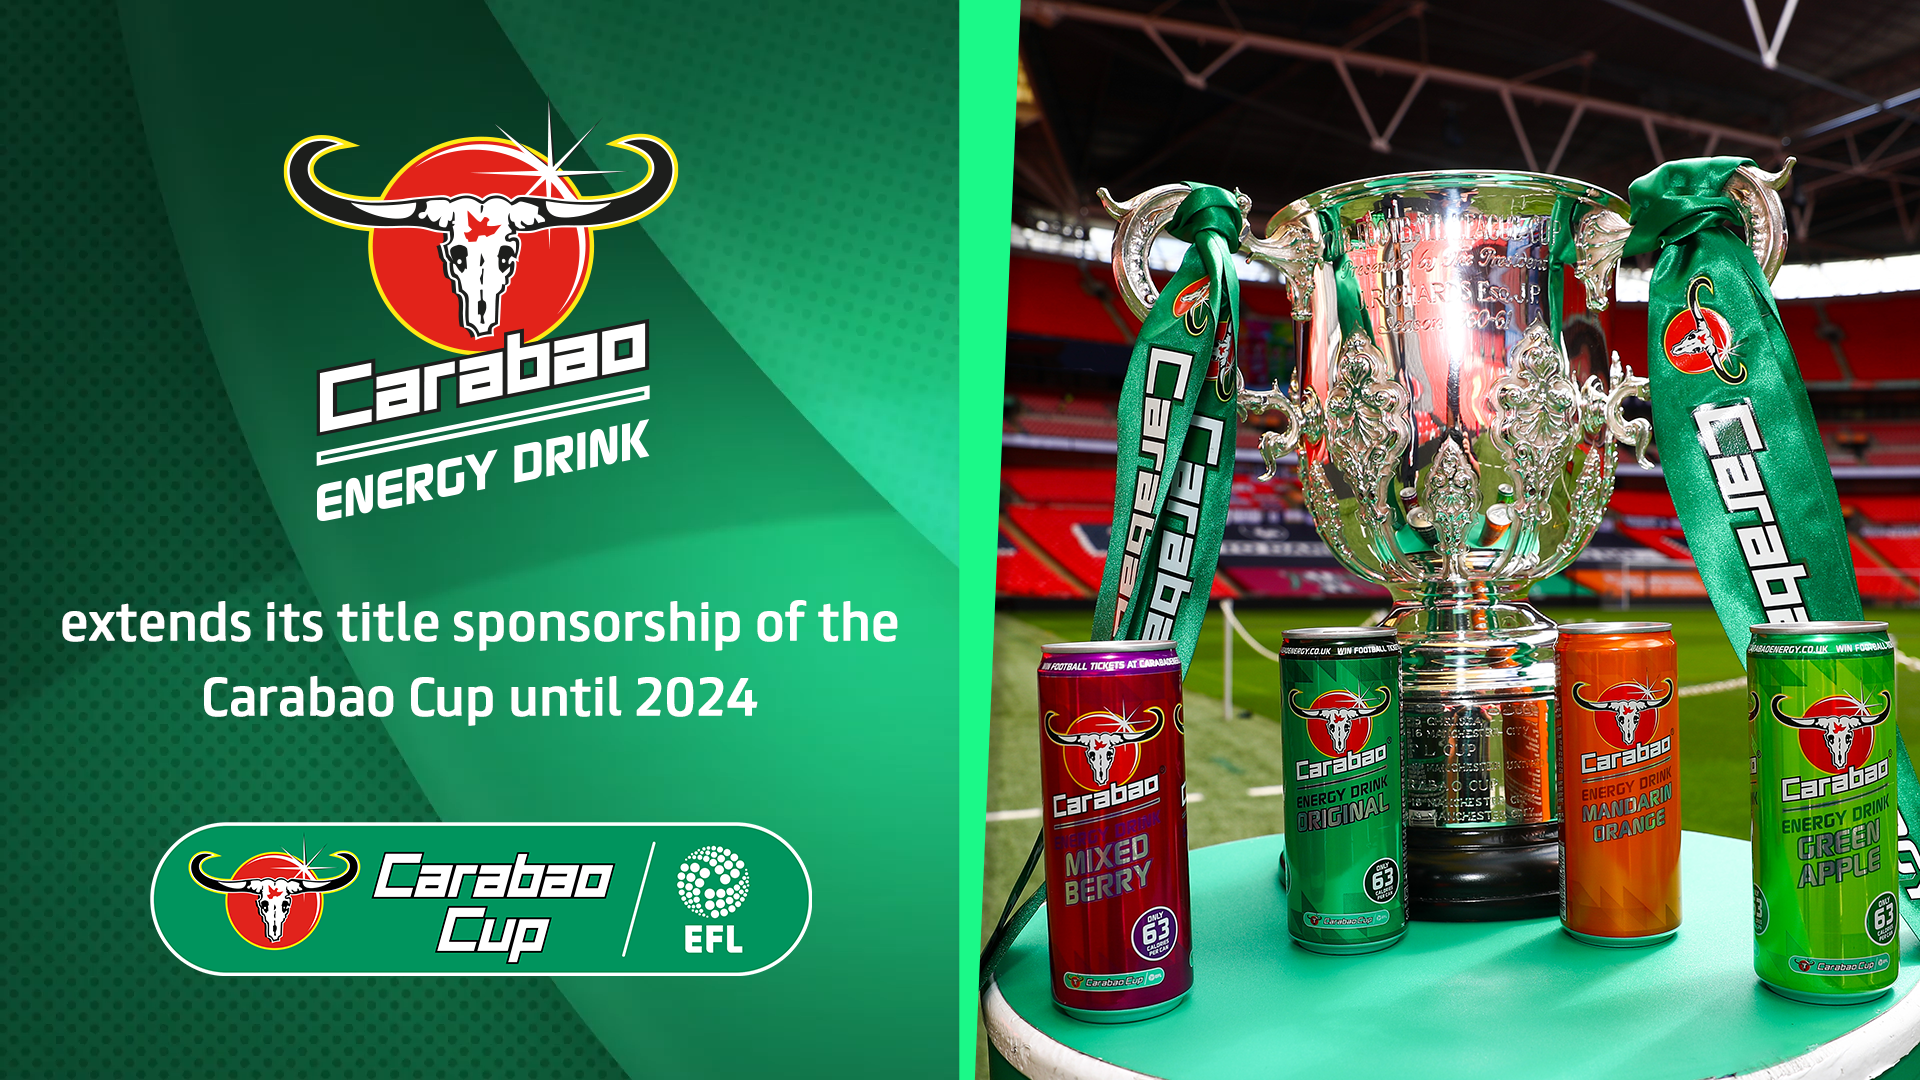 Carabao Energy Drink announces Carabao Cup Partnership extension